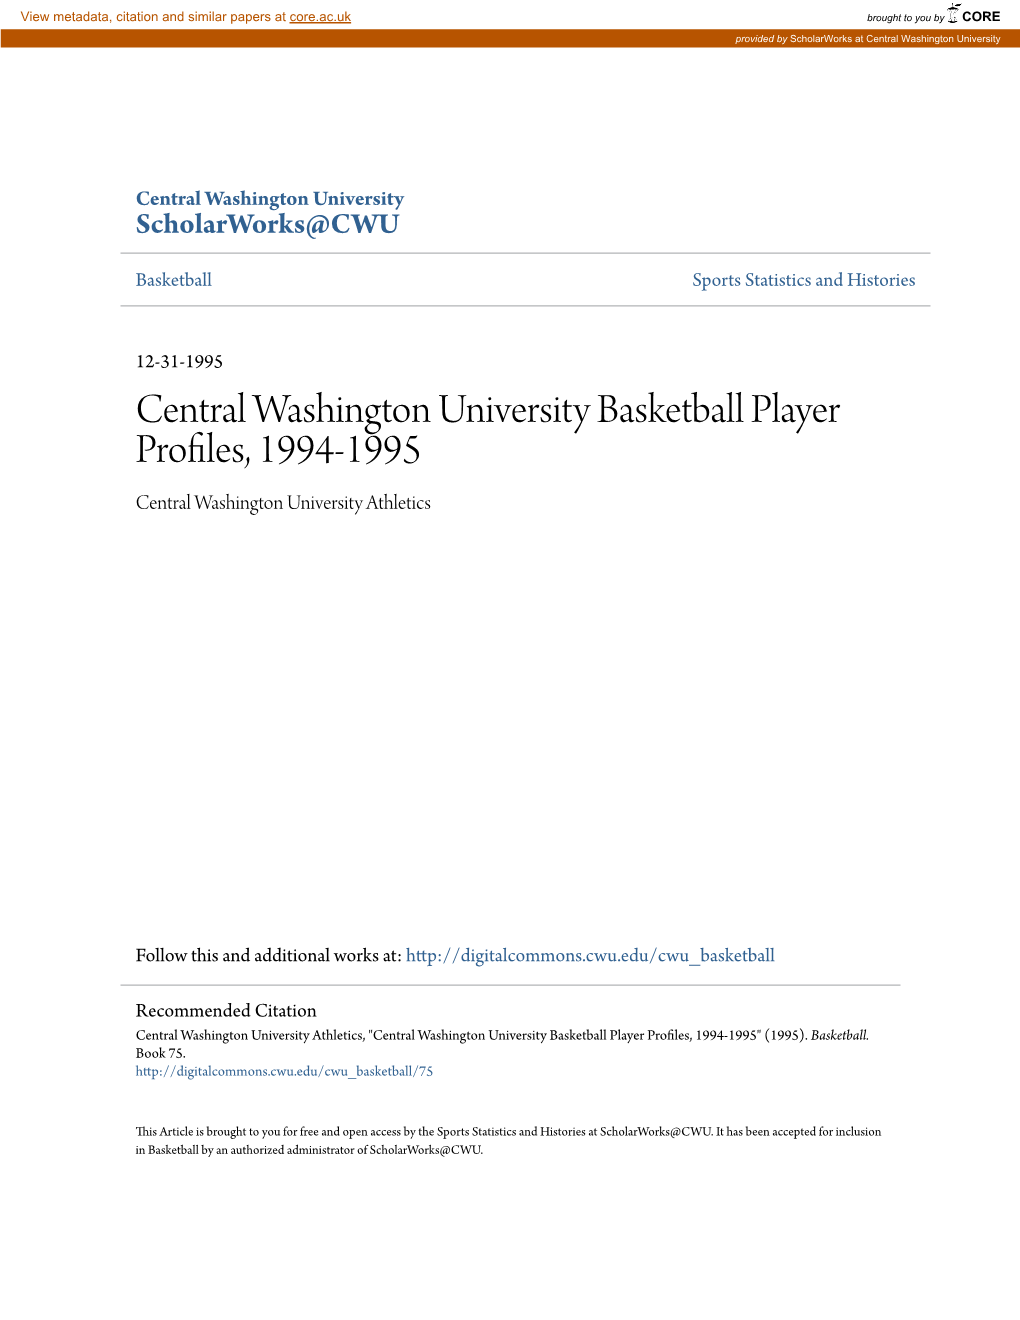 Central Washington University Basketball Player Profiles, 1994-1995 Central Washington University Athletics